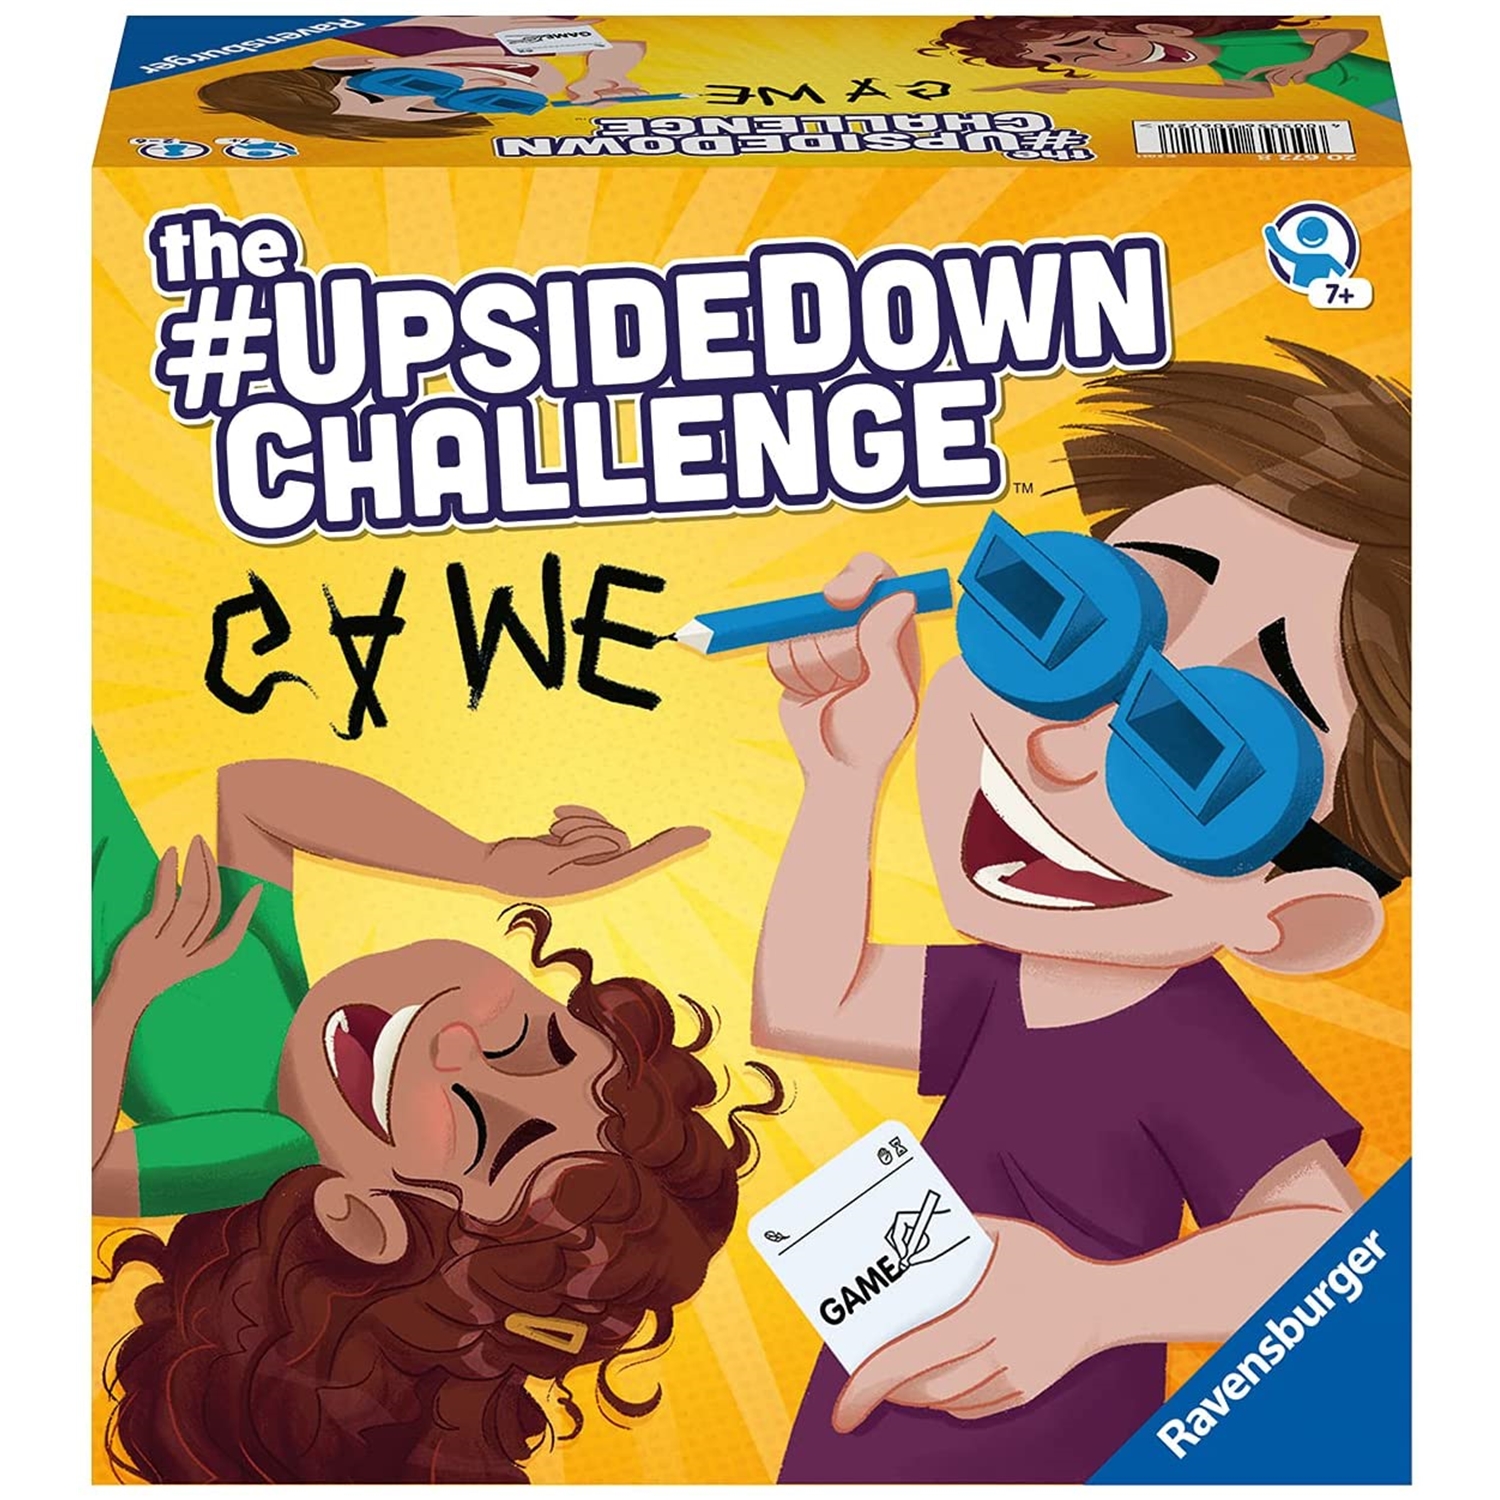 The Challenge #UpsideDown Ravensburger Game